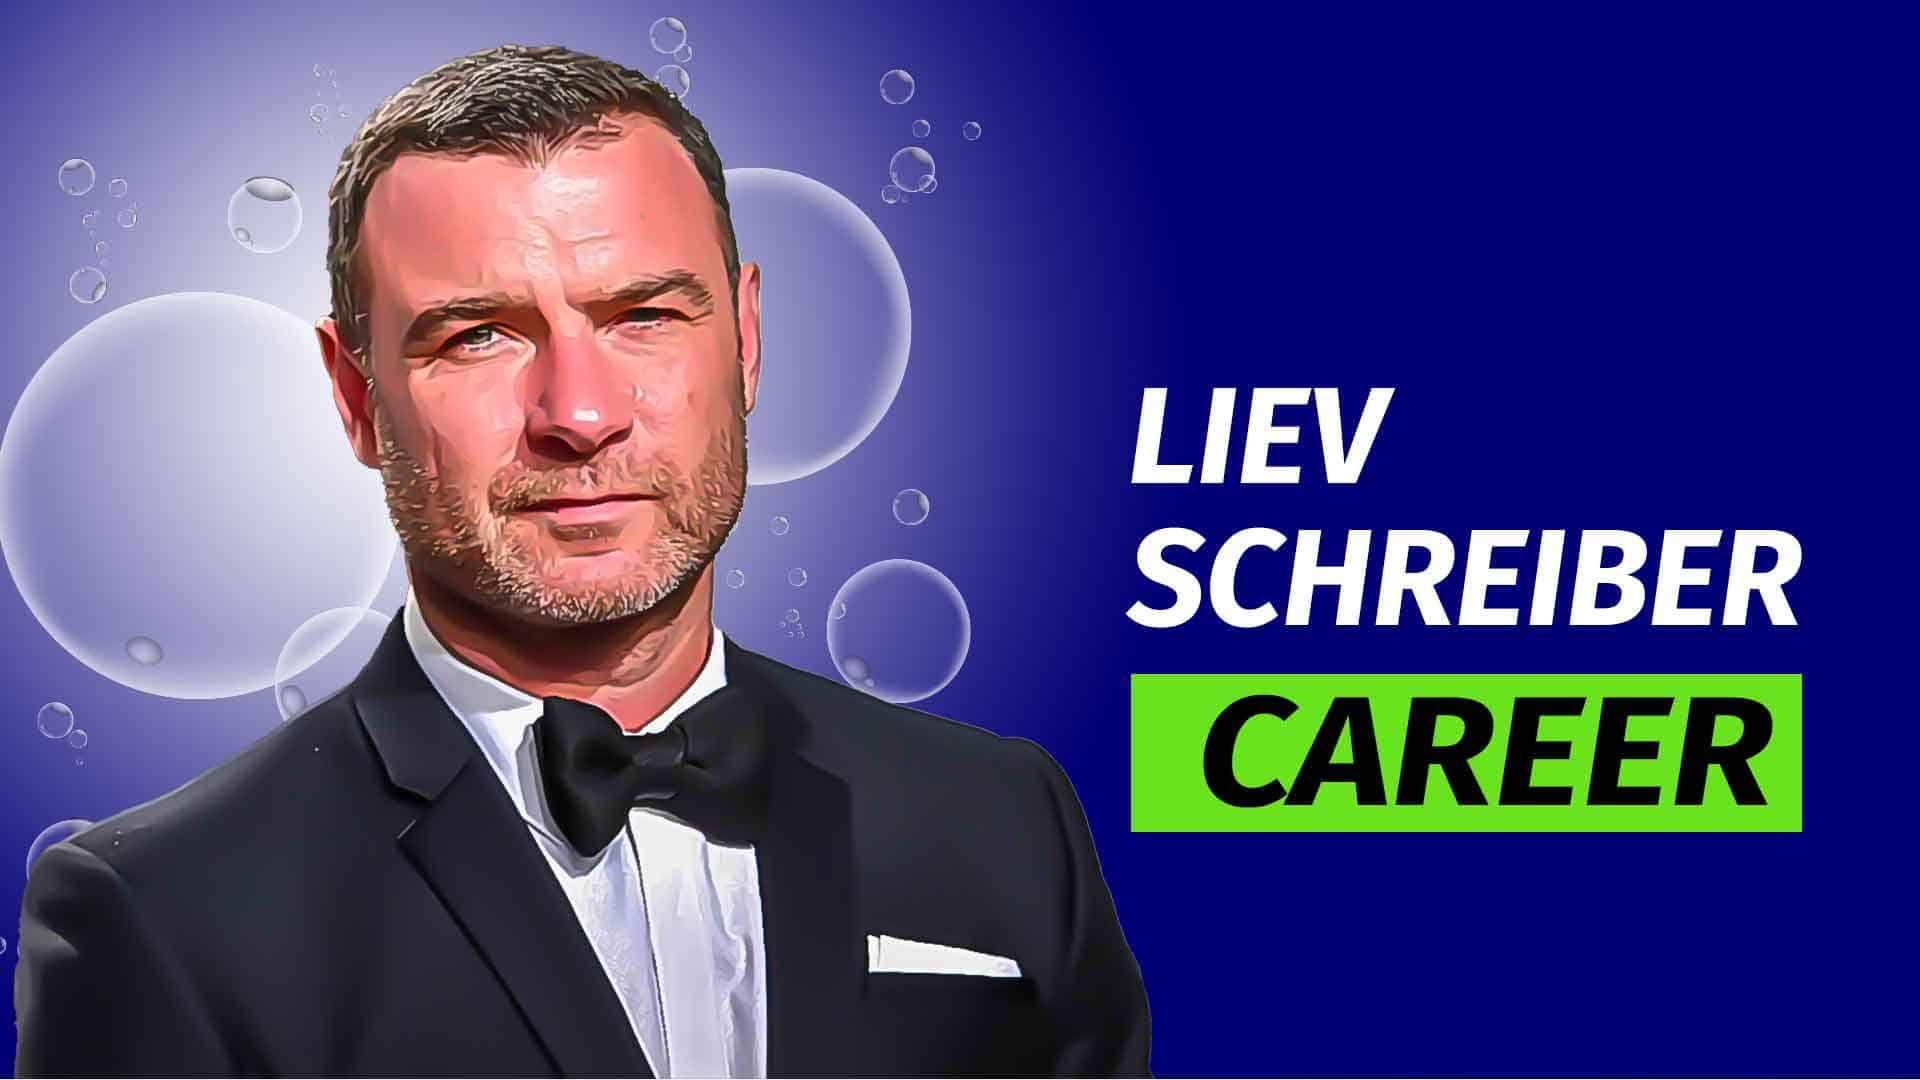 Liev Schreiber career